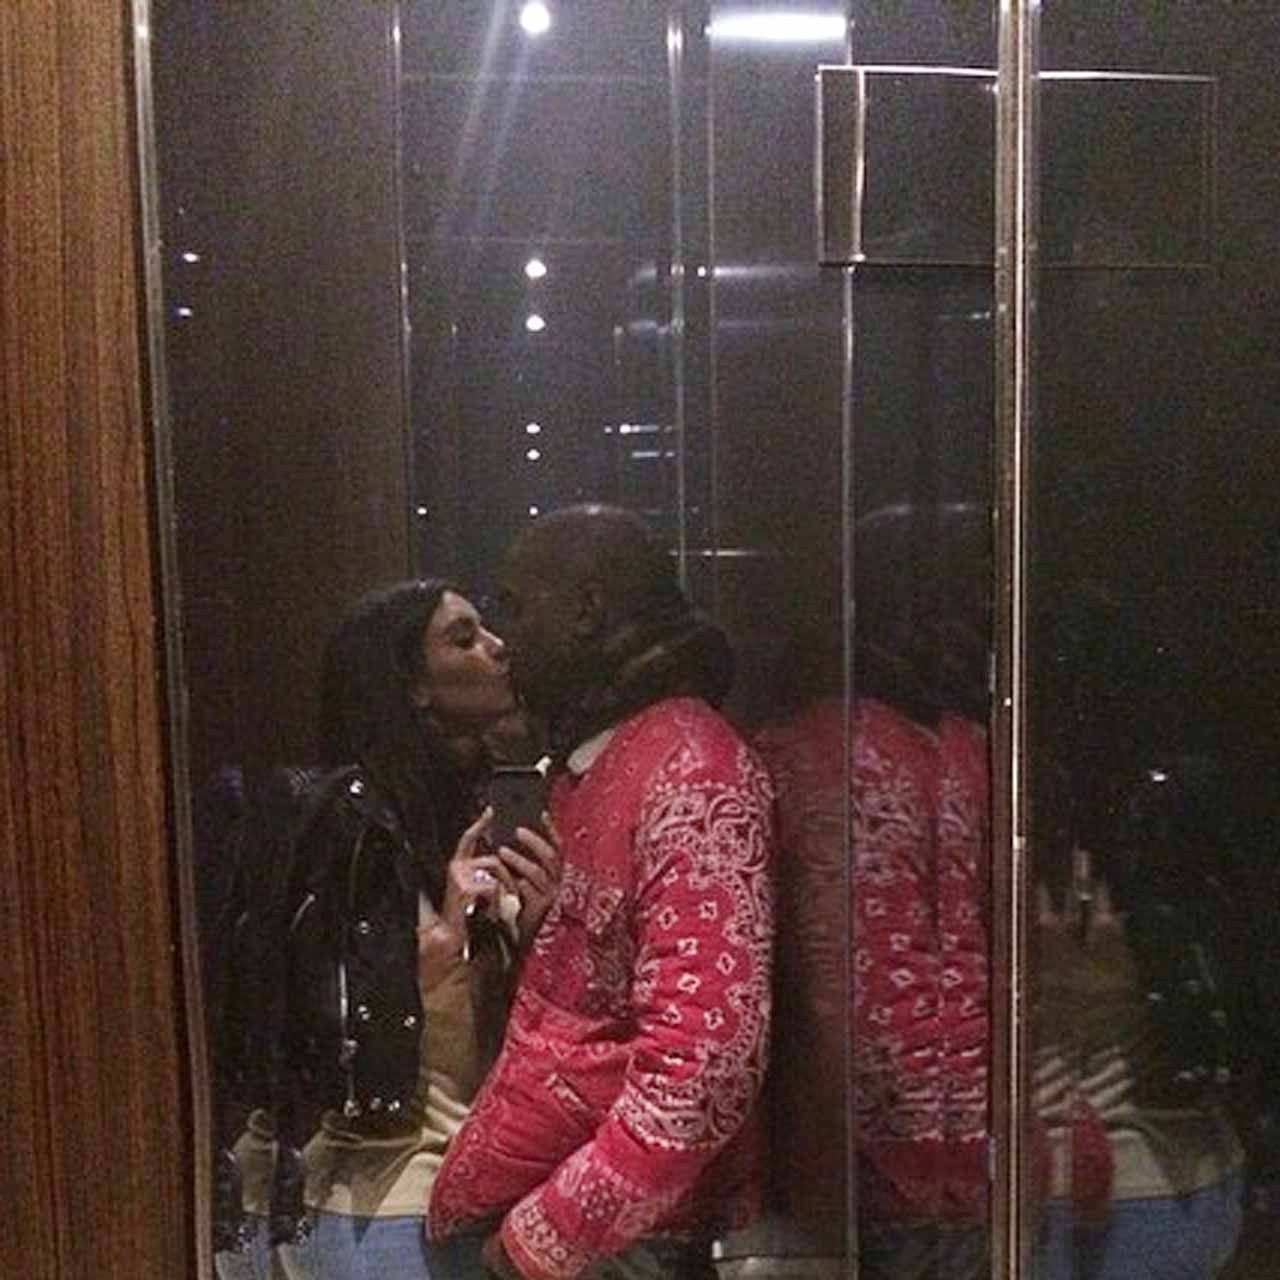 Kim Kardashian and Kanye West kissing in an elevator